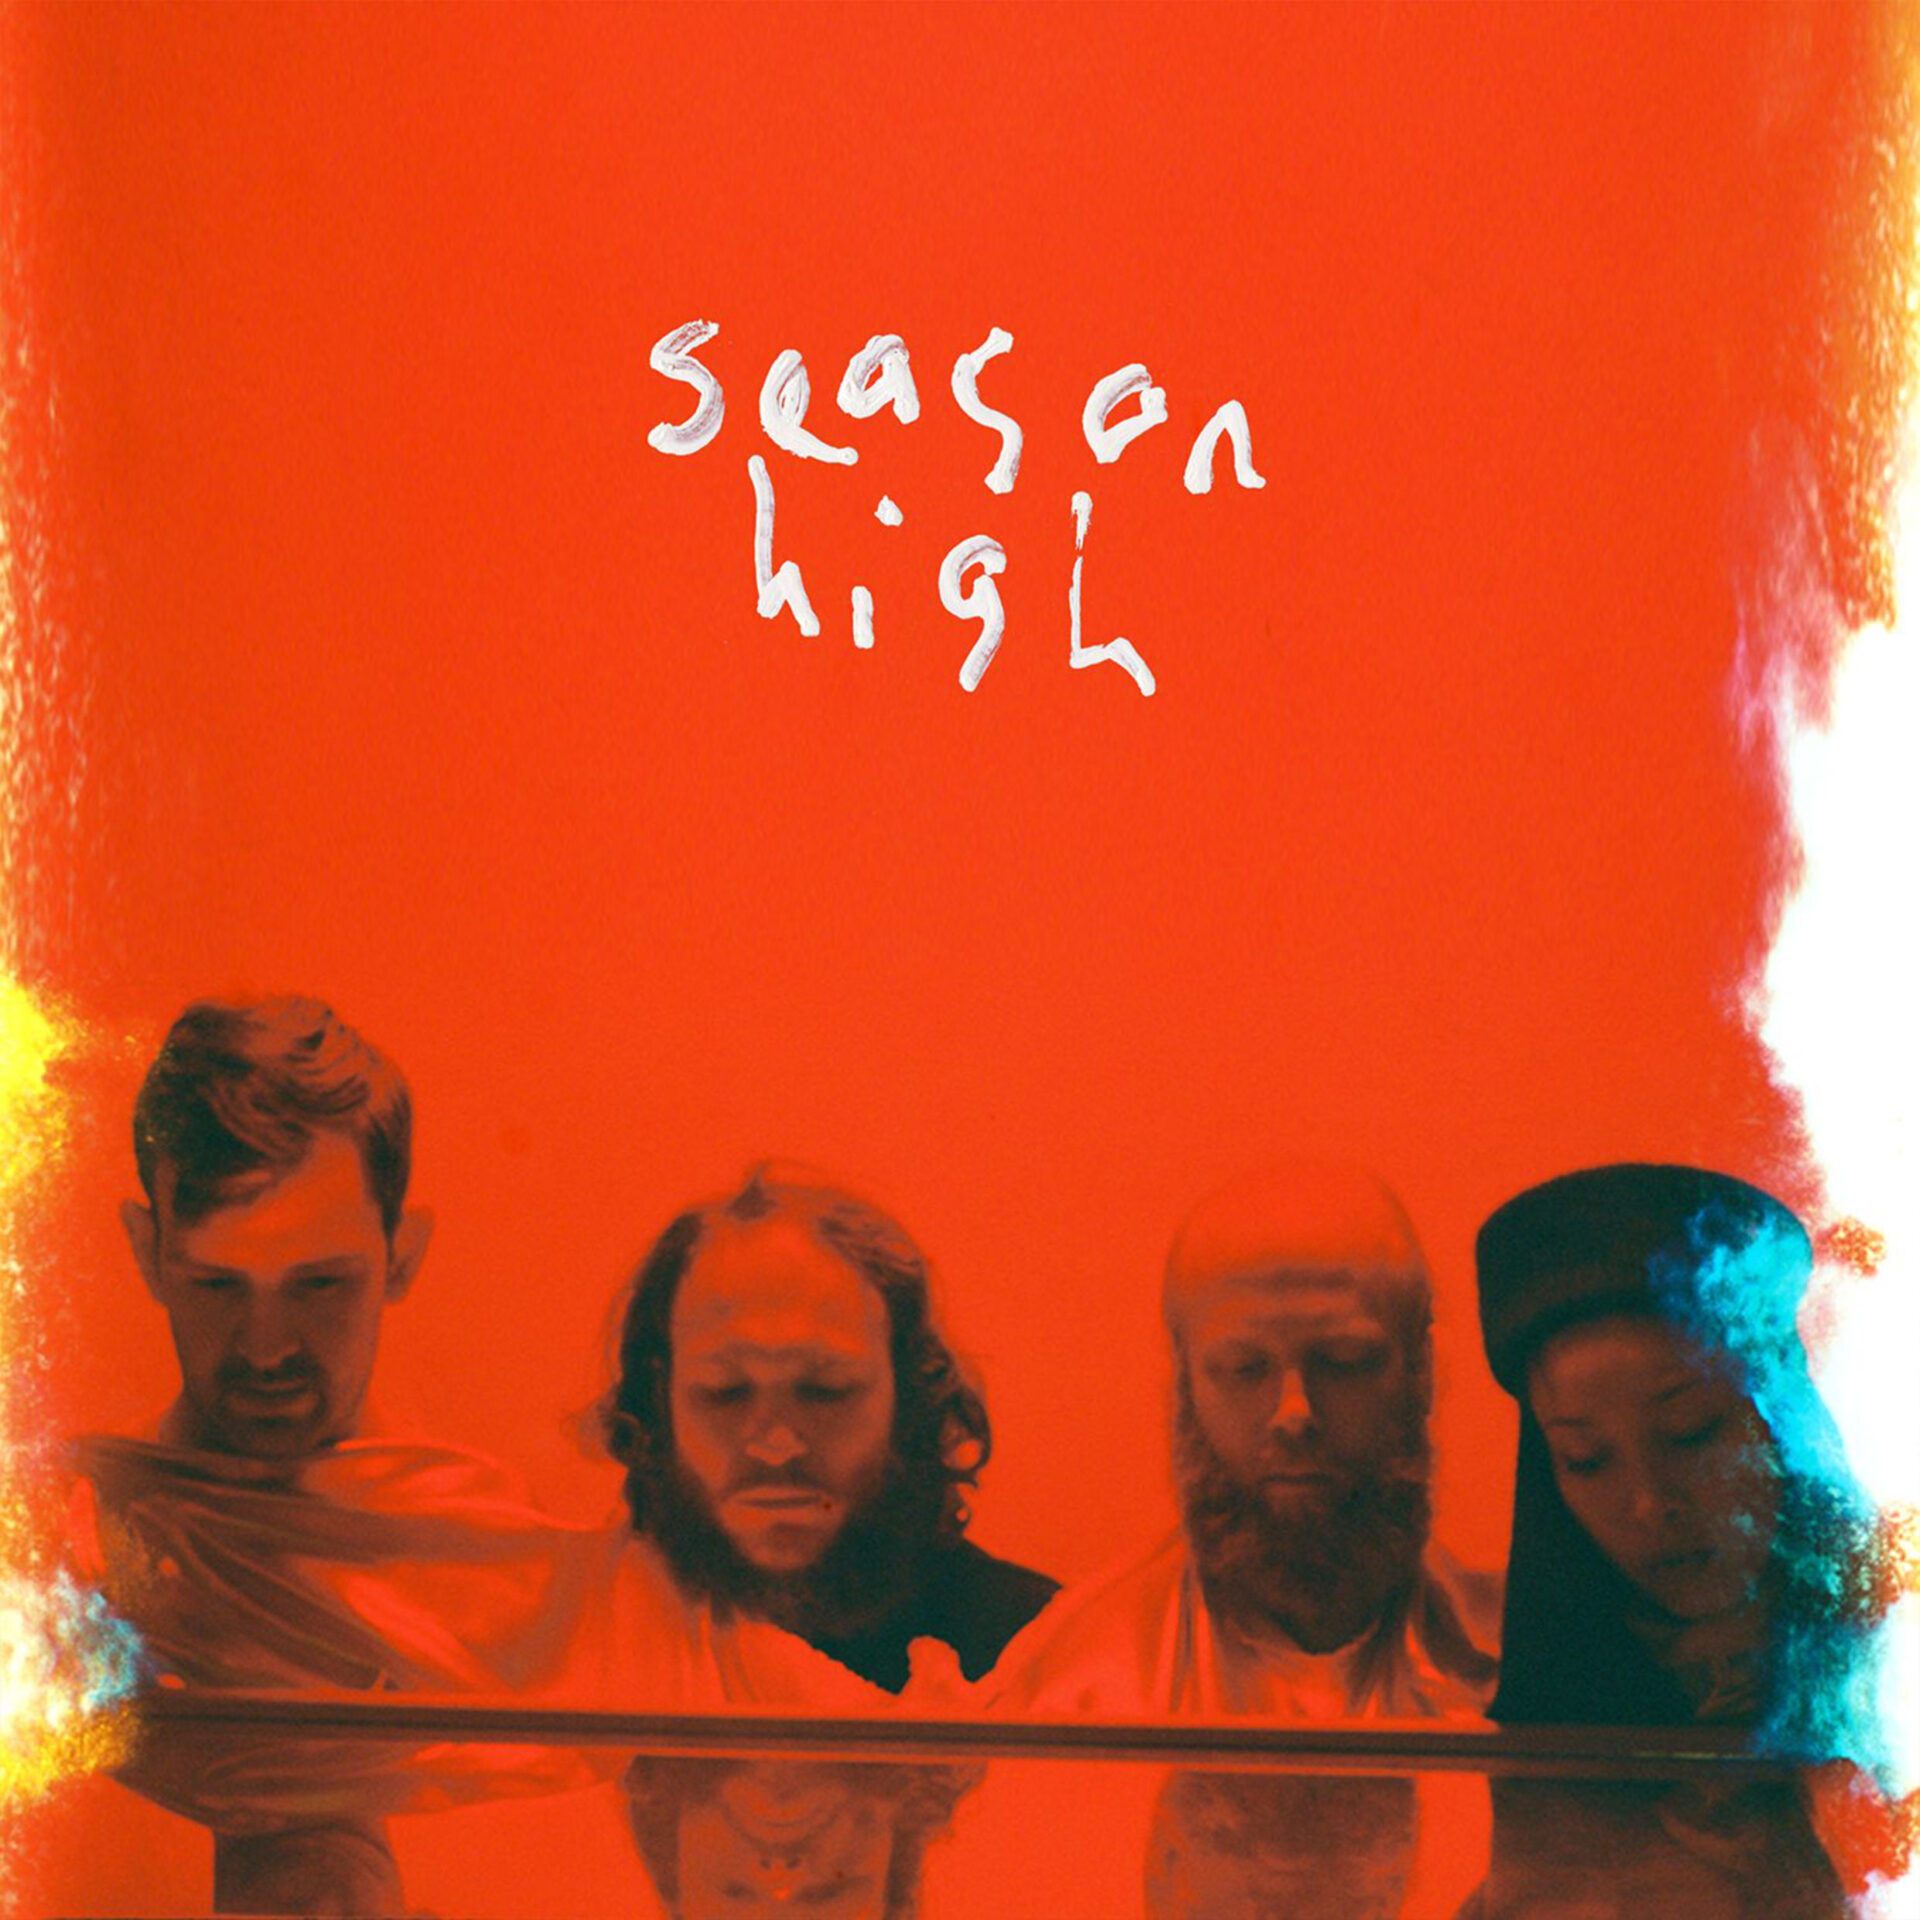 Little Dragon - Season High (Because Music) 2